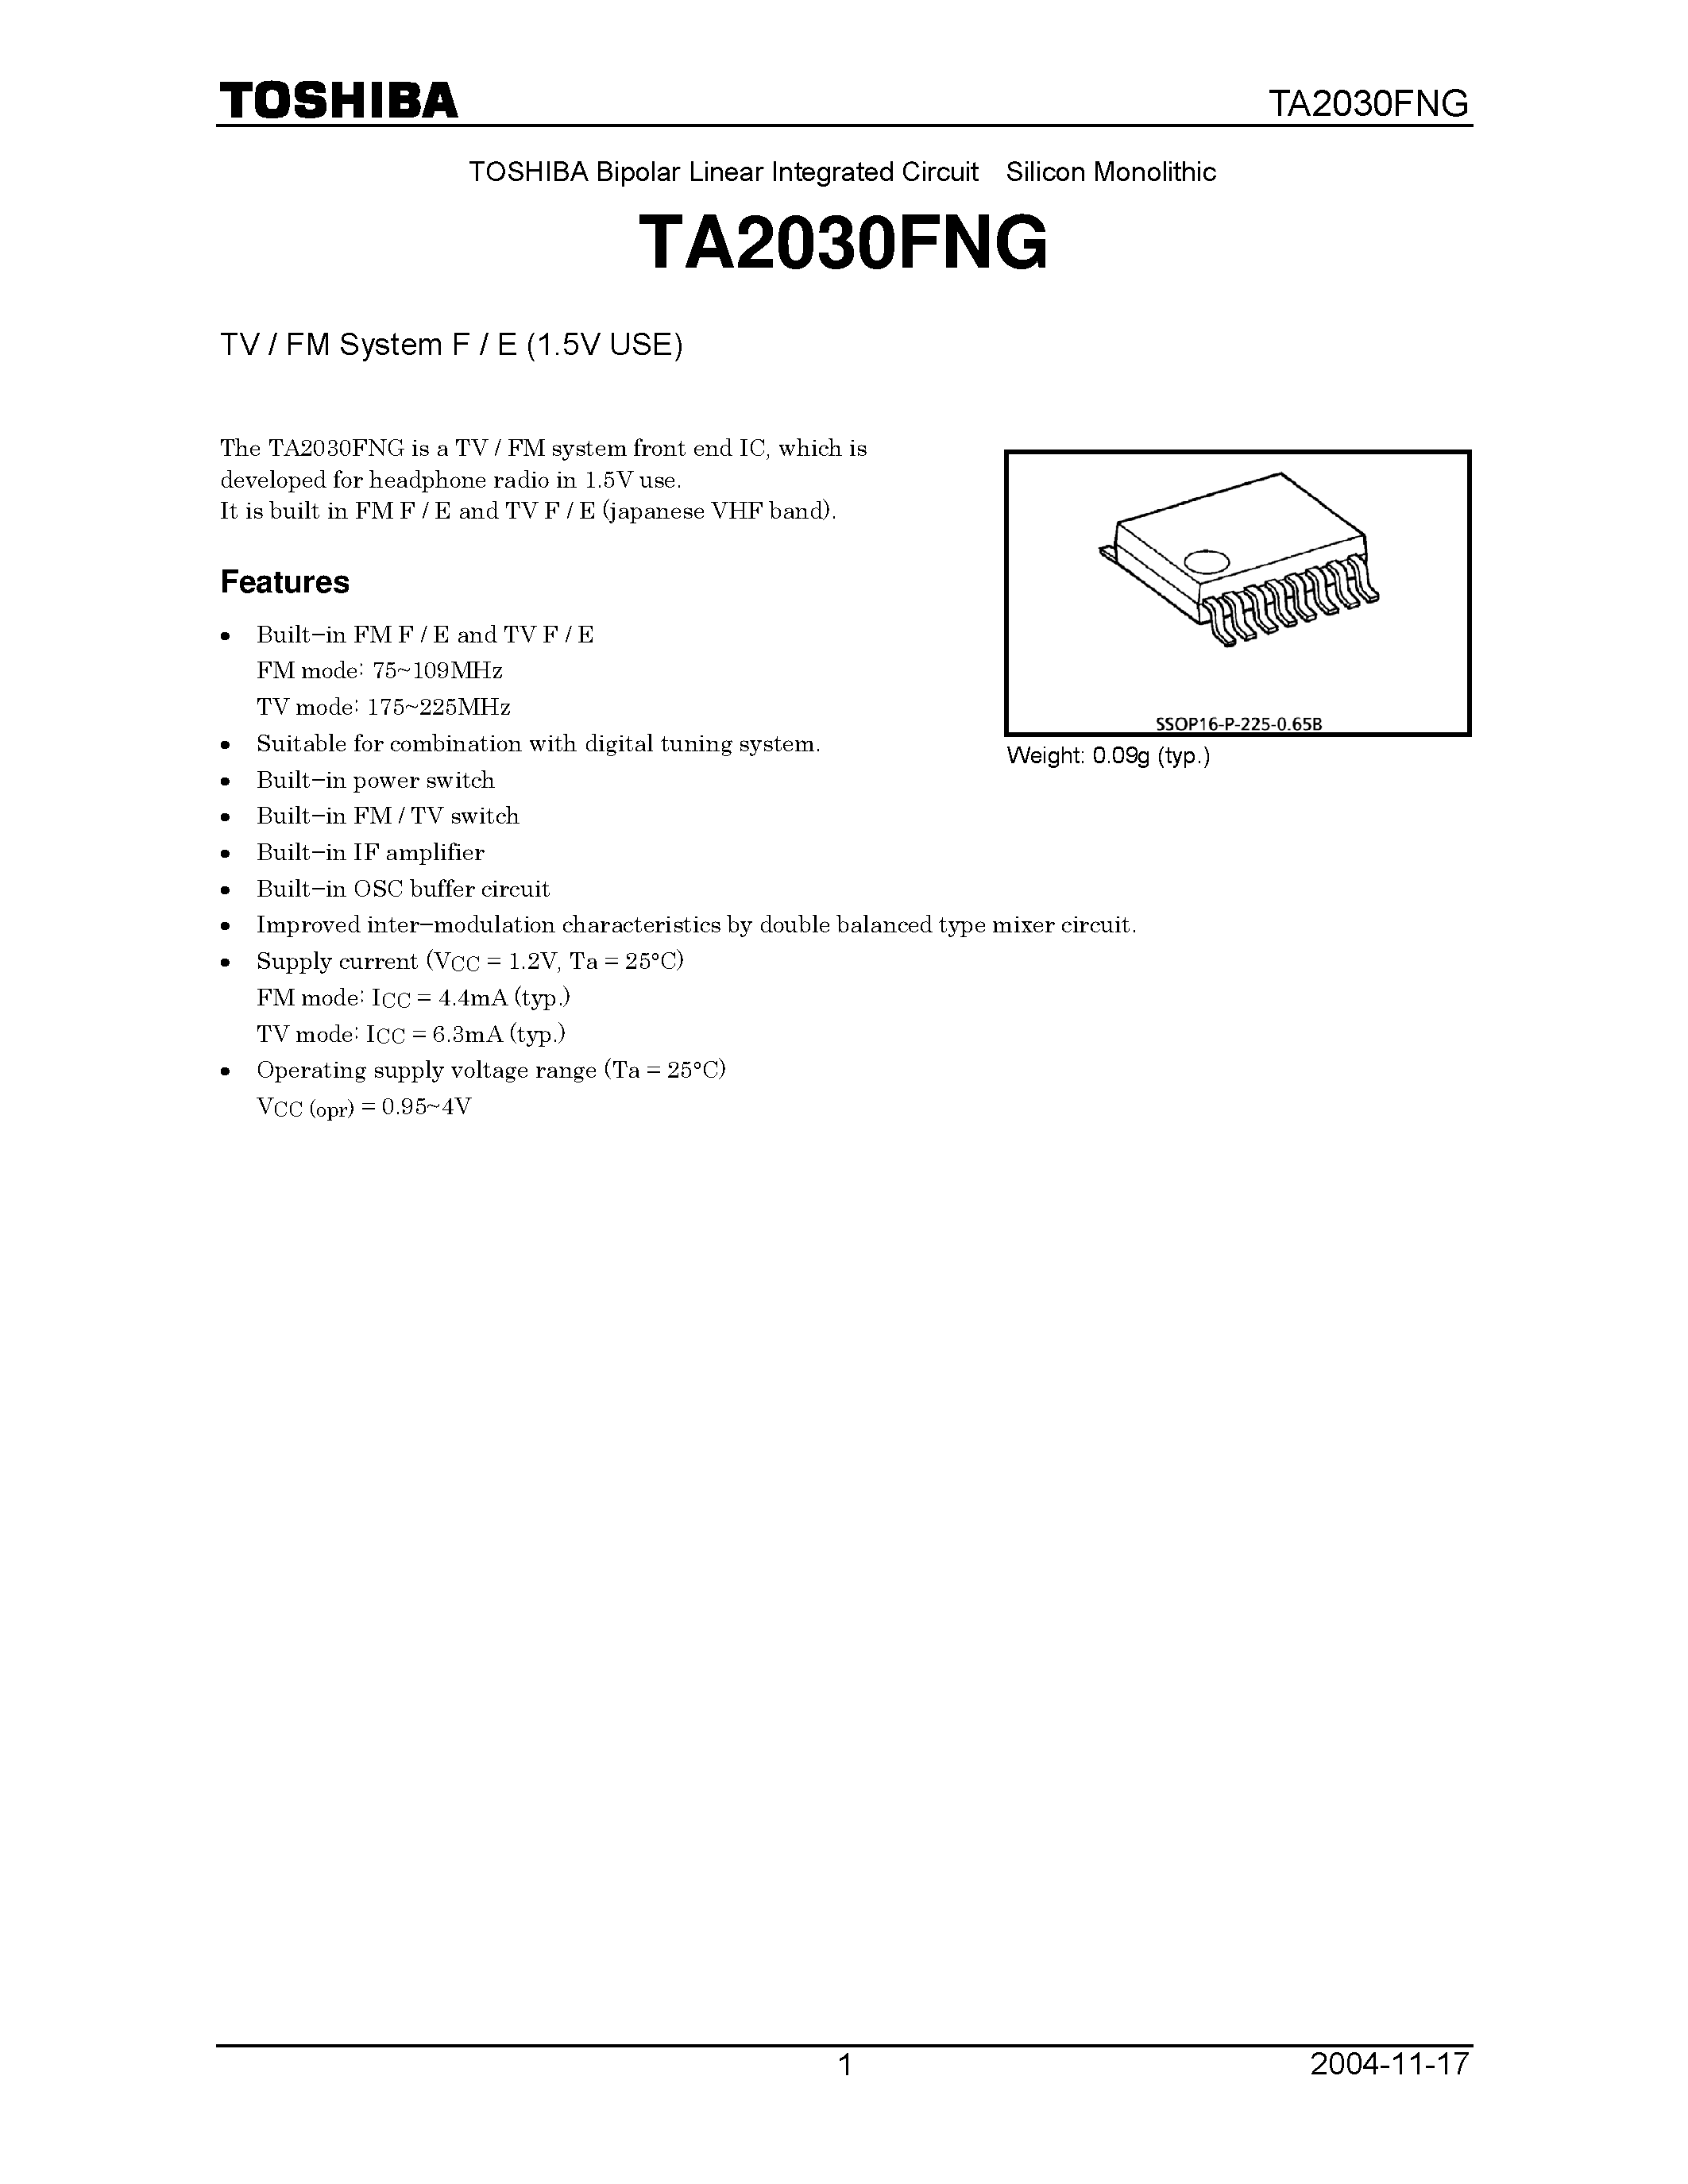 Datasheet TA2030FNG - TV/FM SYSTEM F/E (1.5V USE) page 1